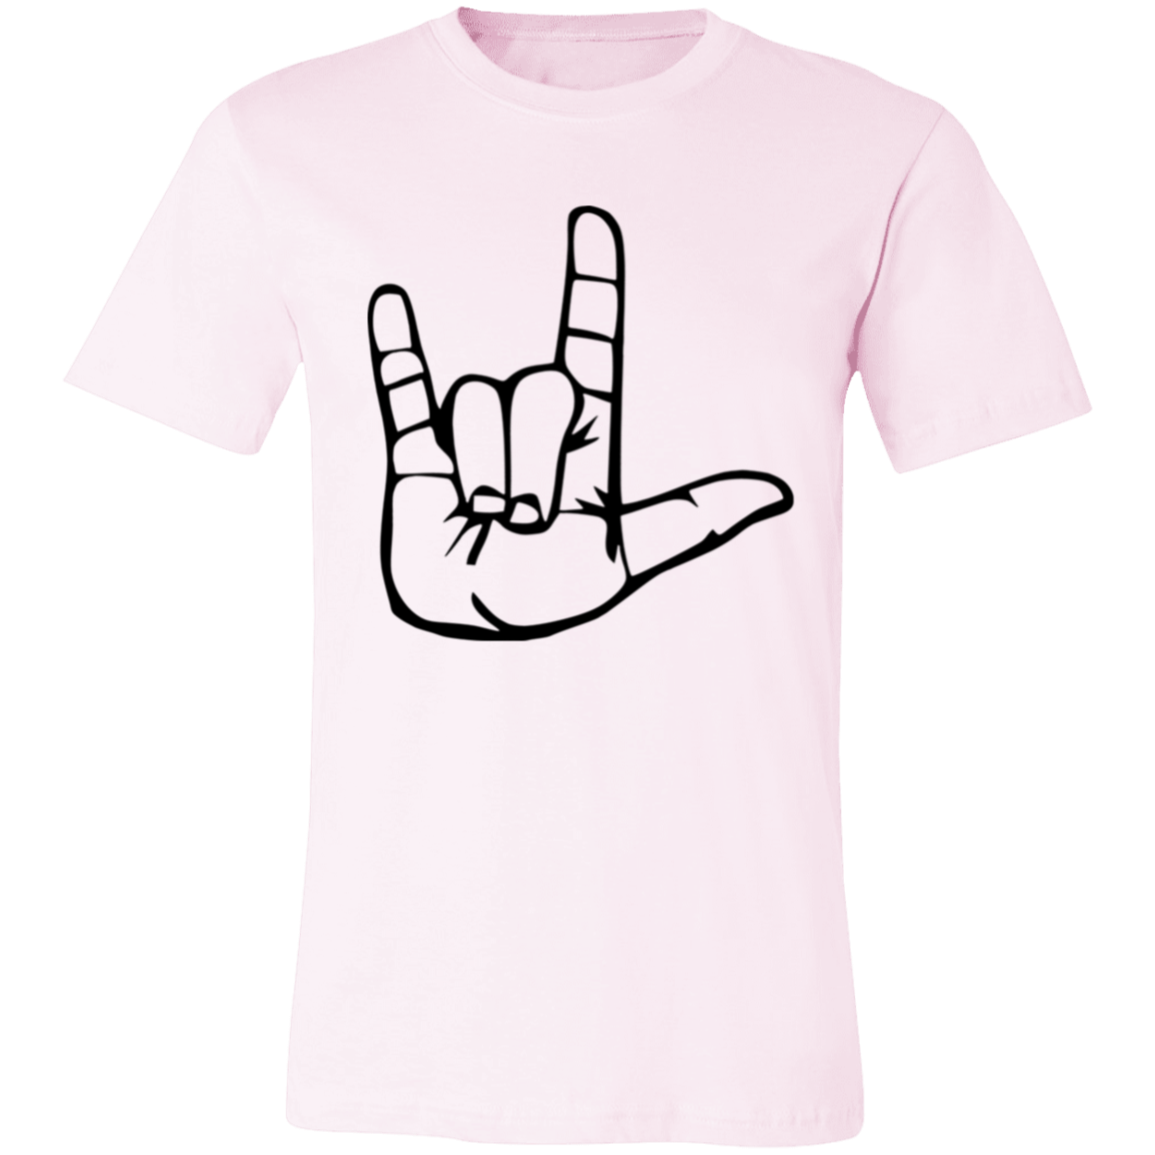 I Love You ASL 3001C Unisex Jersey Short-Sleeve T-Shirt